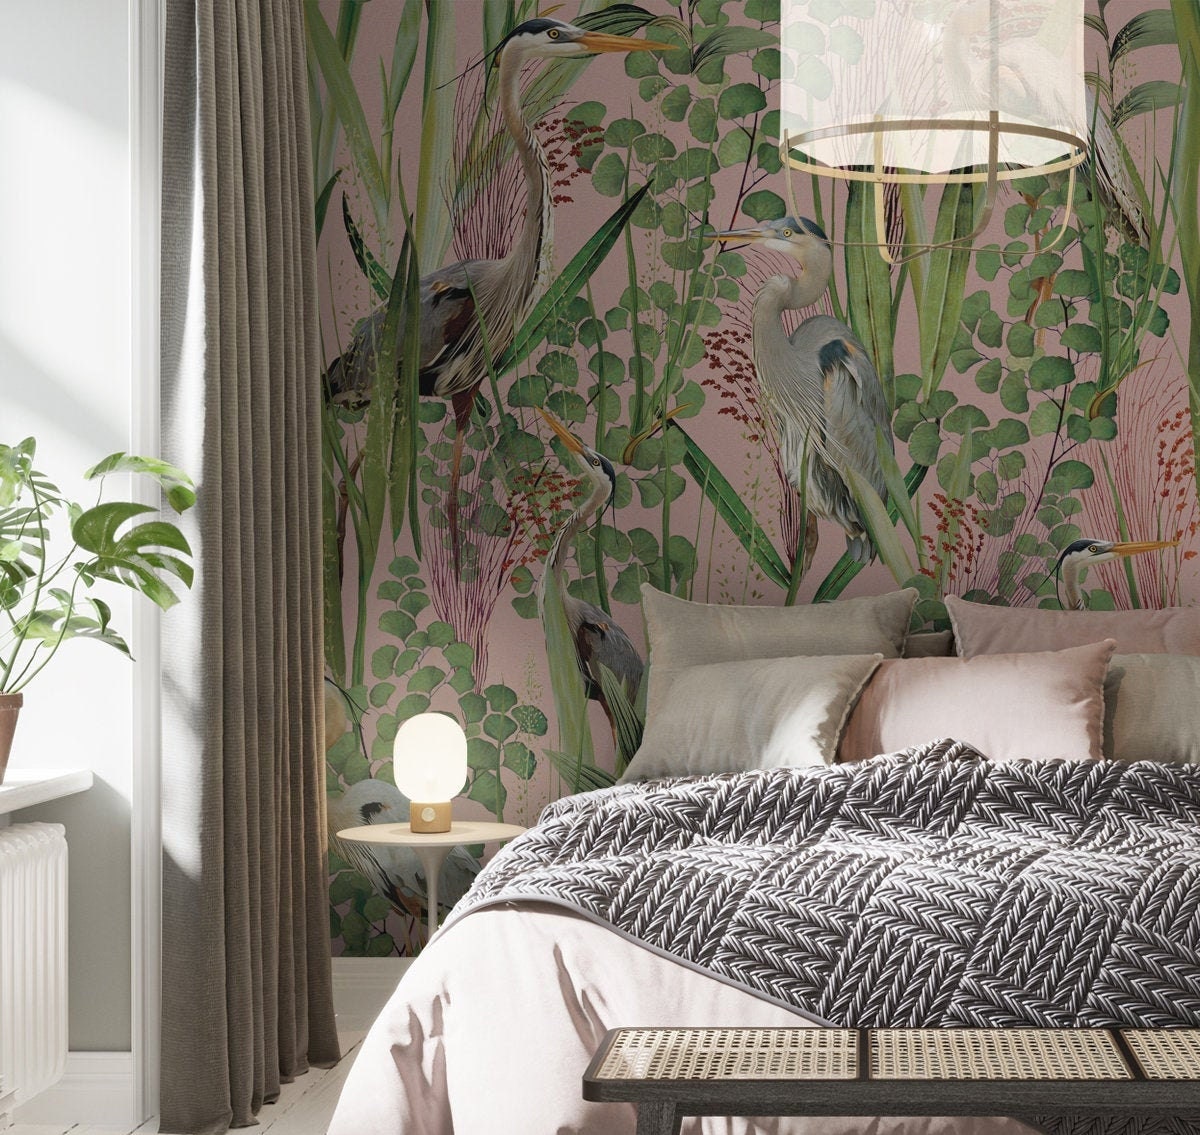 Gucci Bloom Wallpaper 🌸  Print design art, Scenery wallpaper